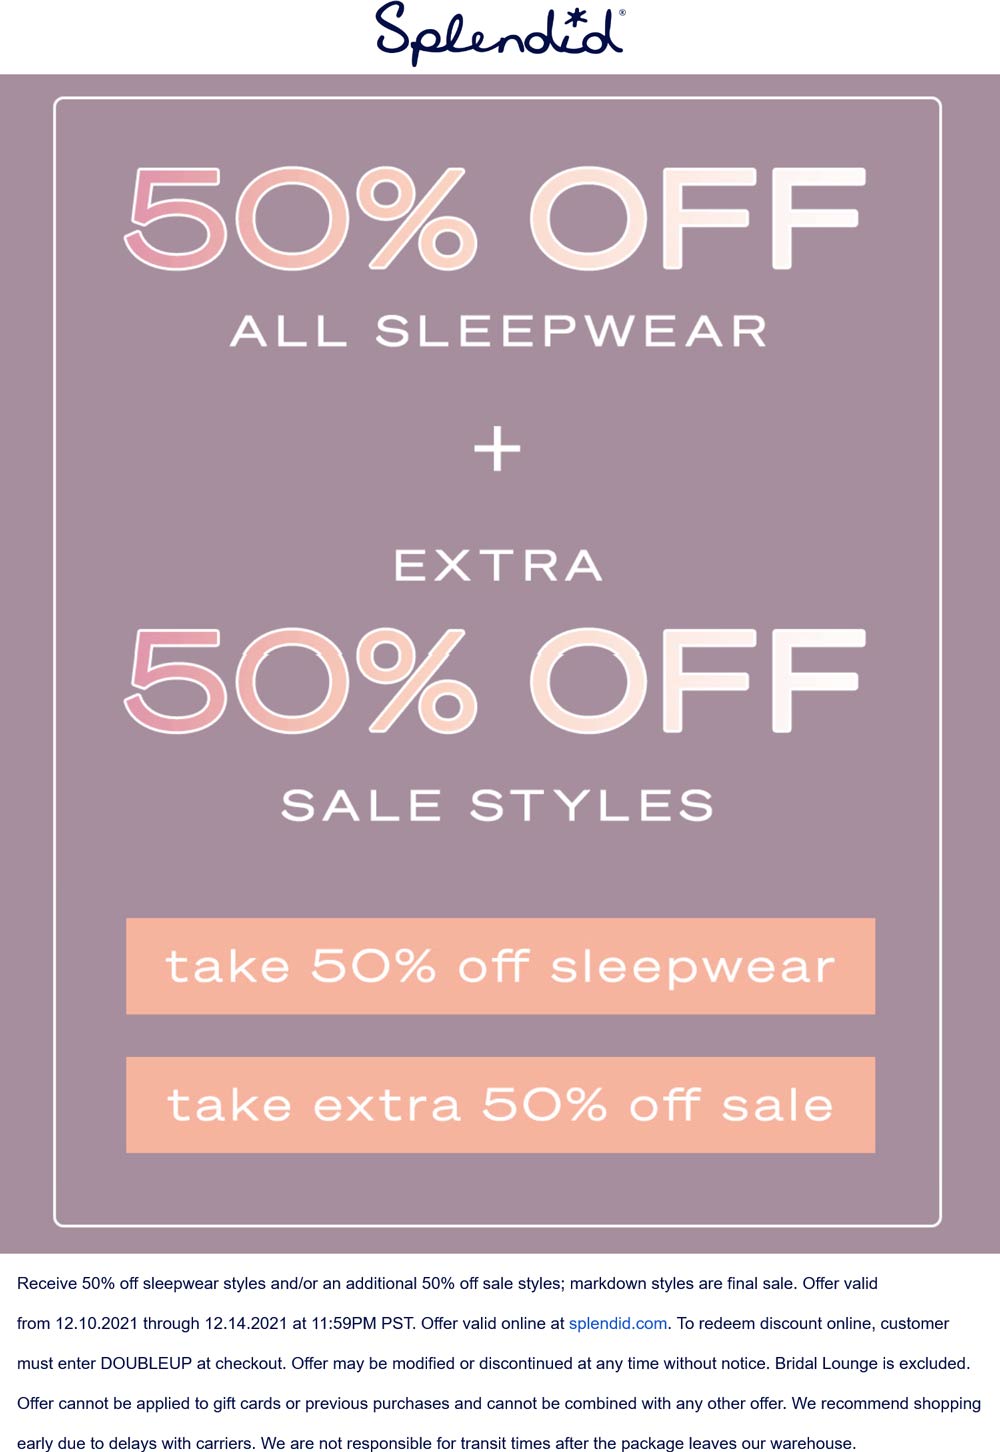 Splendid stores Coupon  Extra 50% off sale styles at Splendid via promo code DOUBLEUP #splendid 